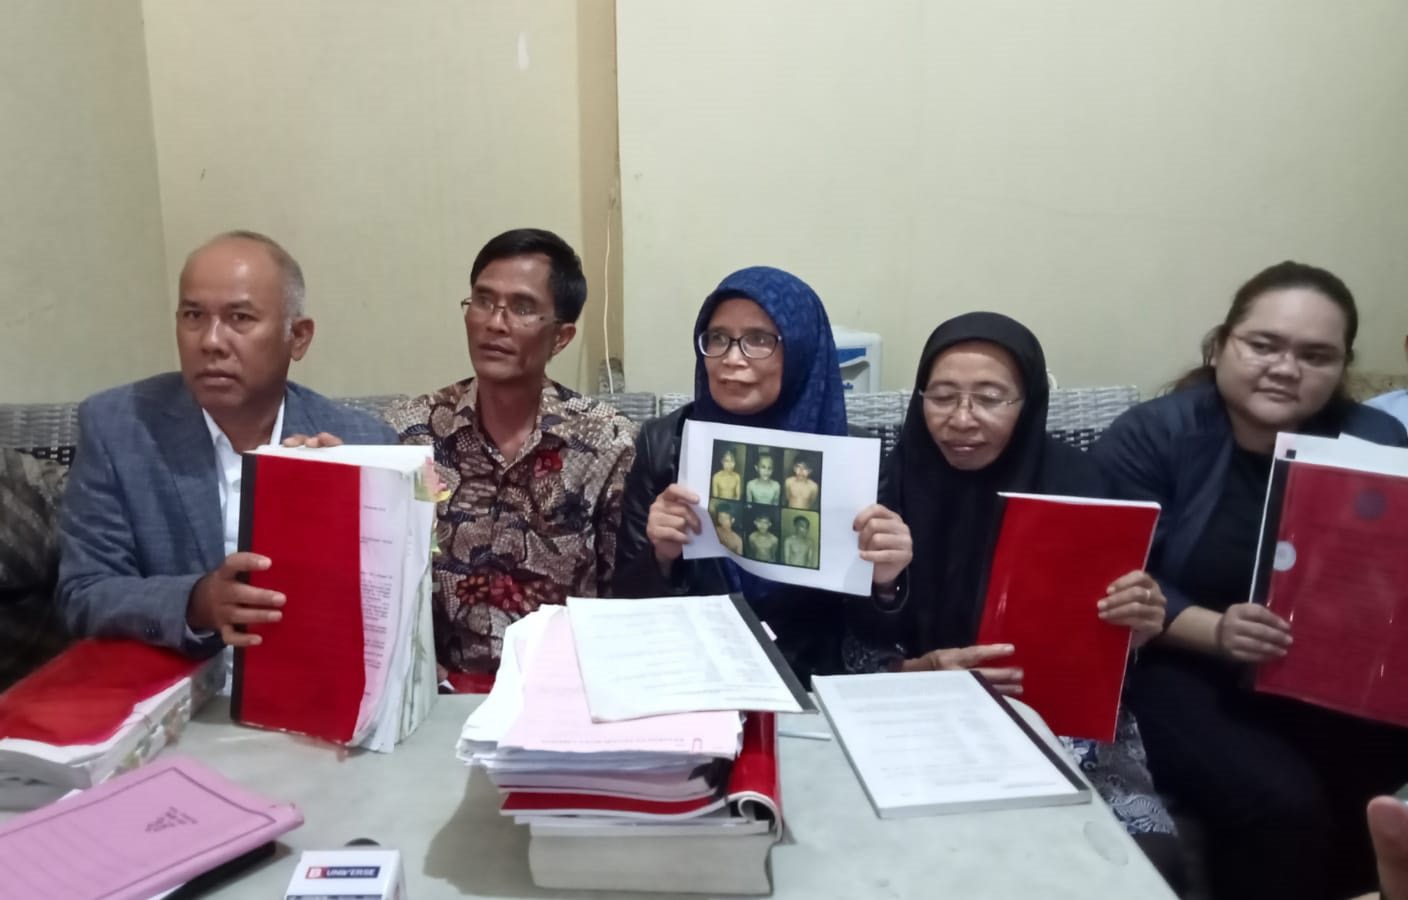 Persidangan Kasus Vina Cirebon Banyak Kejanggalan, Tim Kuasa Hukum Terdakwa Beberkan Fakta